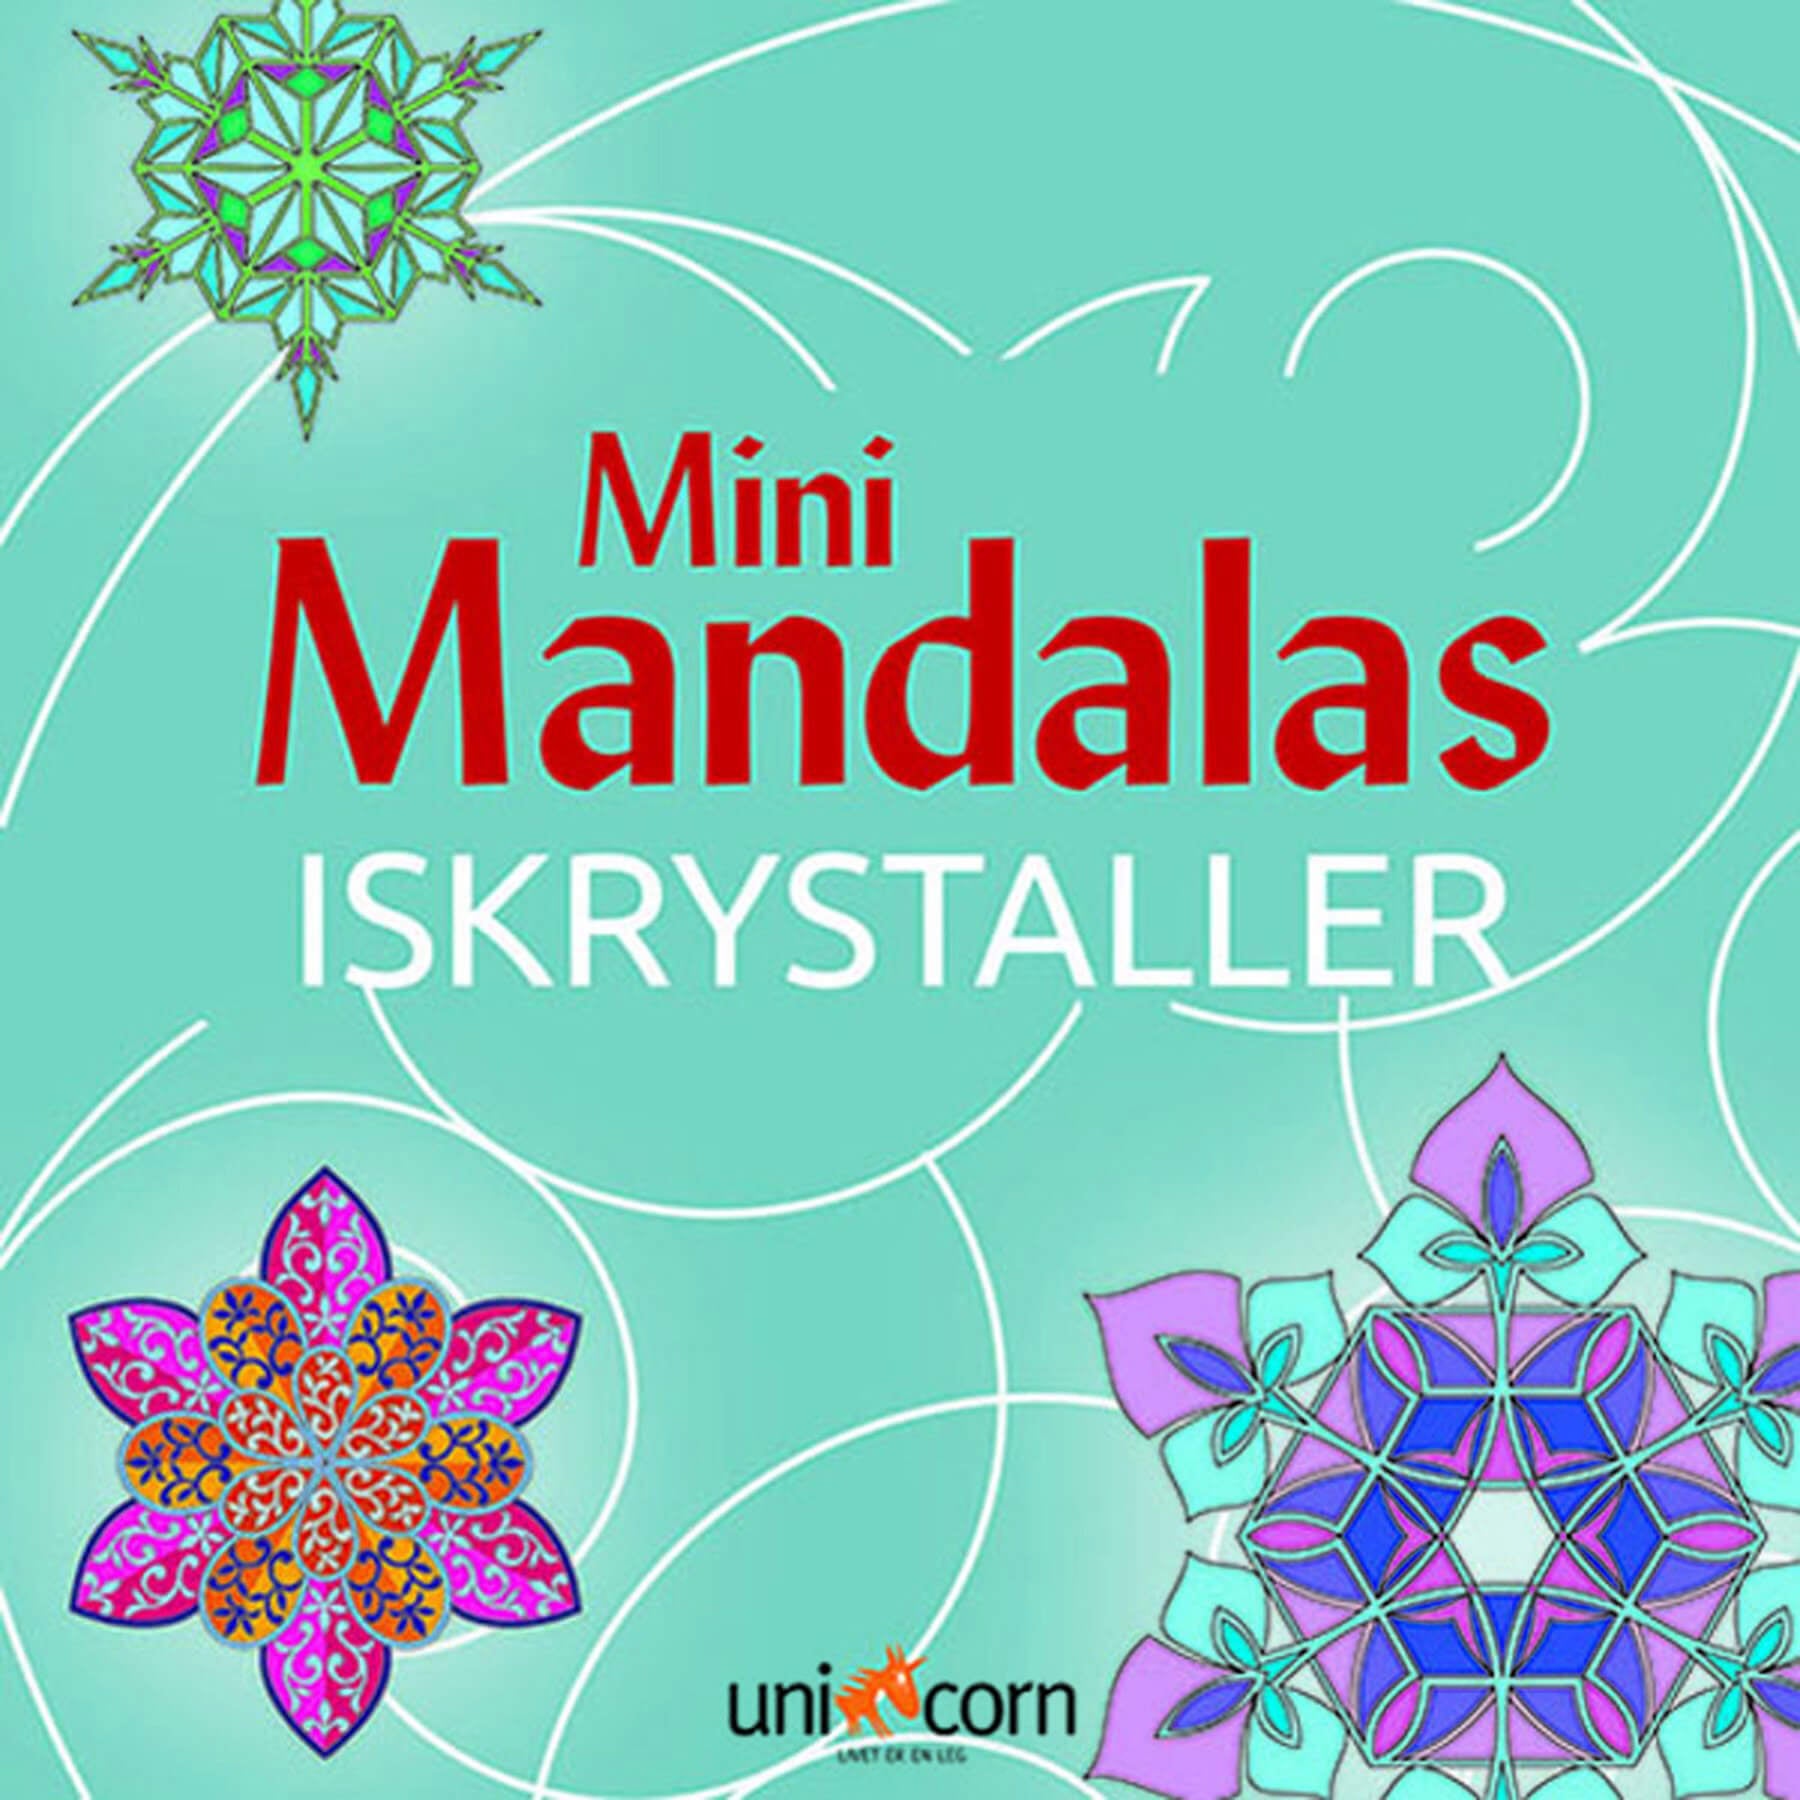 Mandalas - Mini Mandalas - Iskrystaller